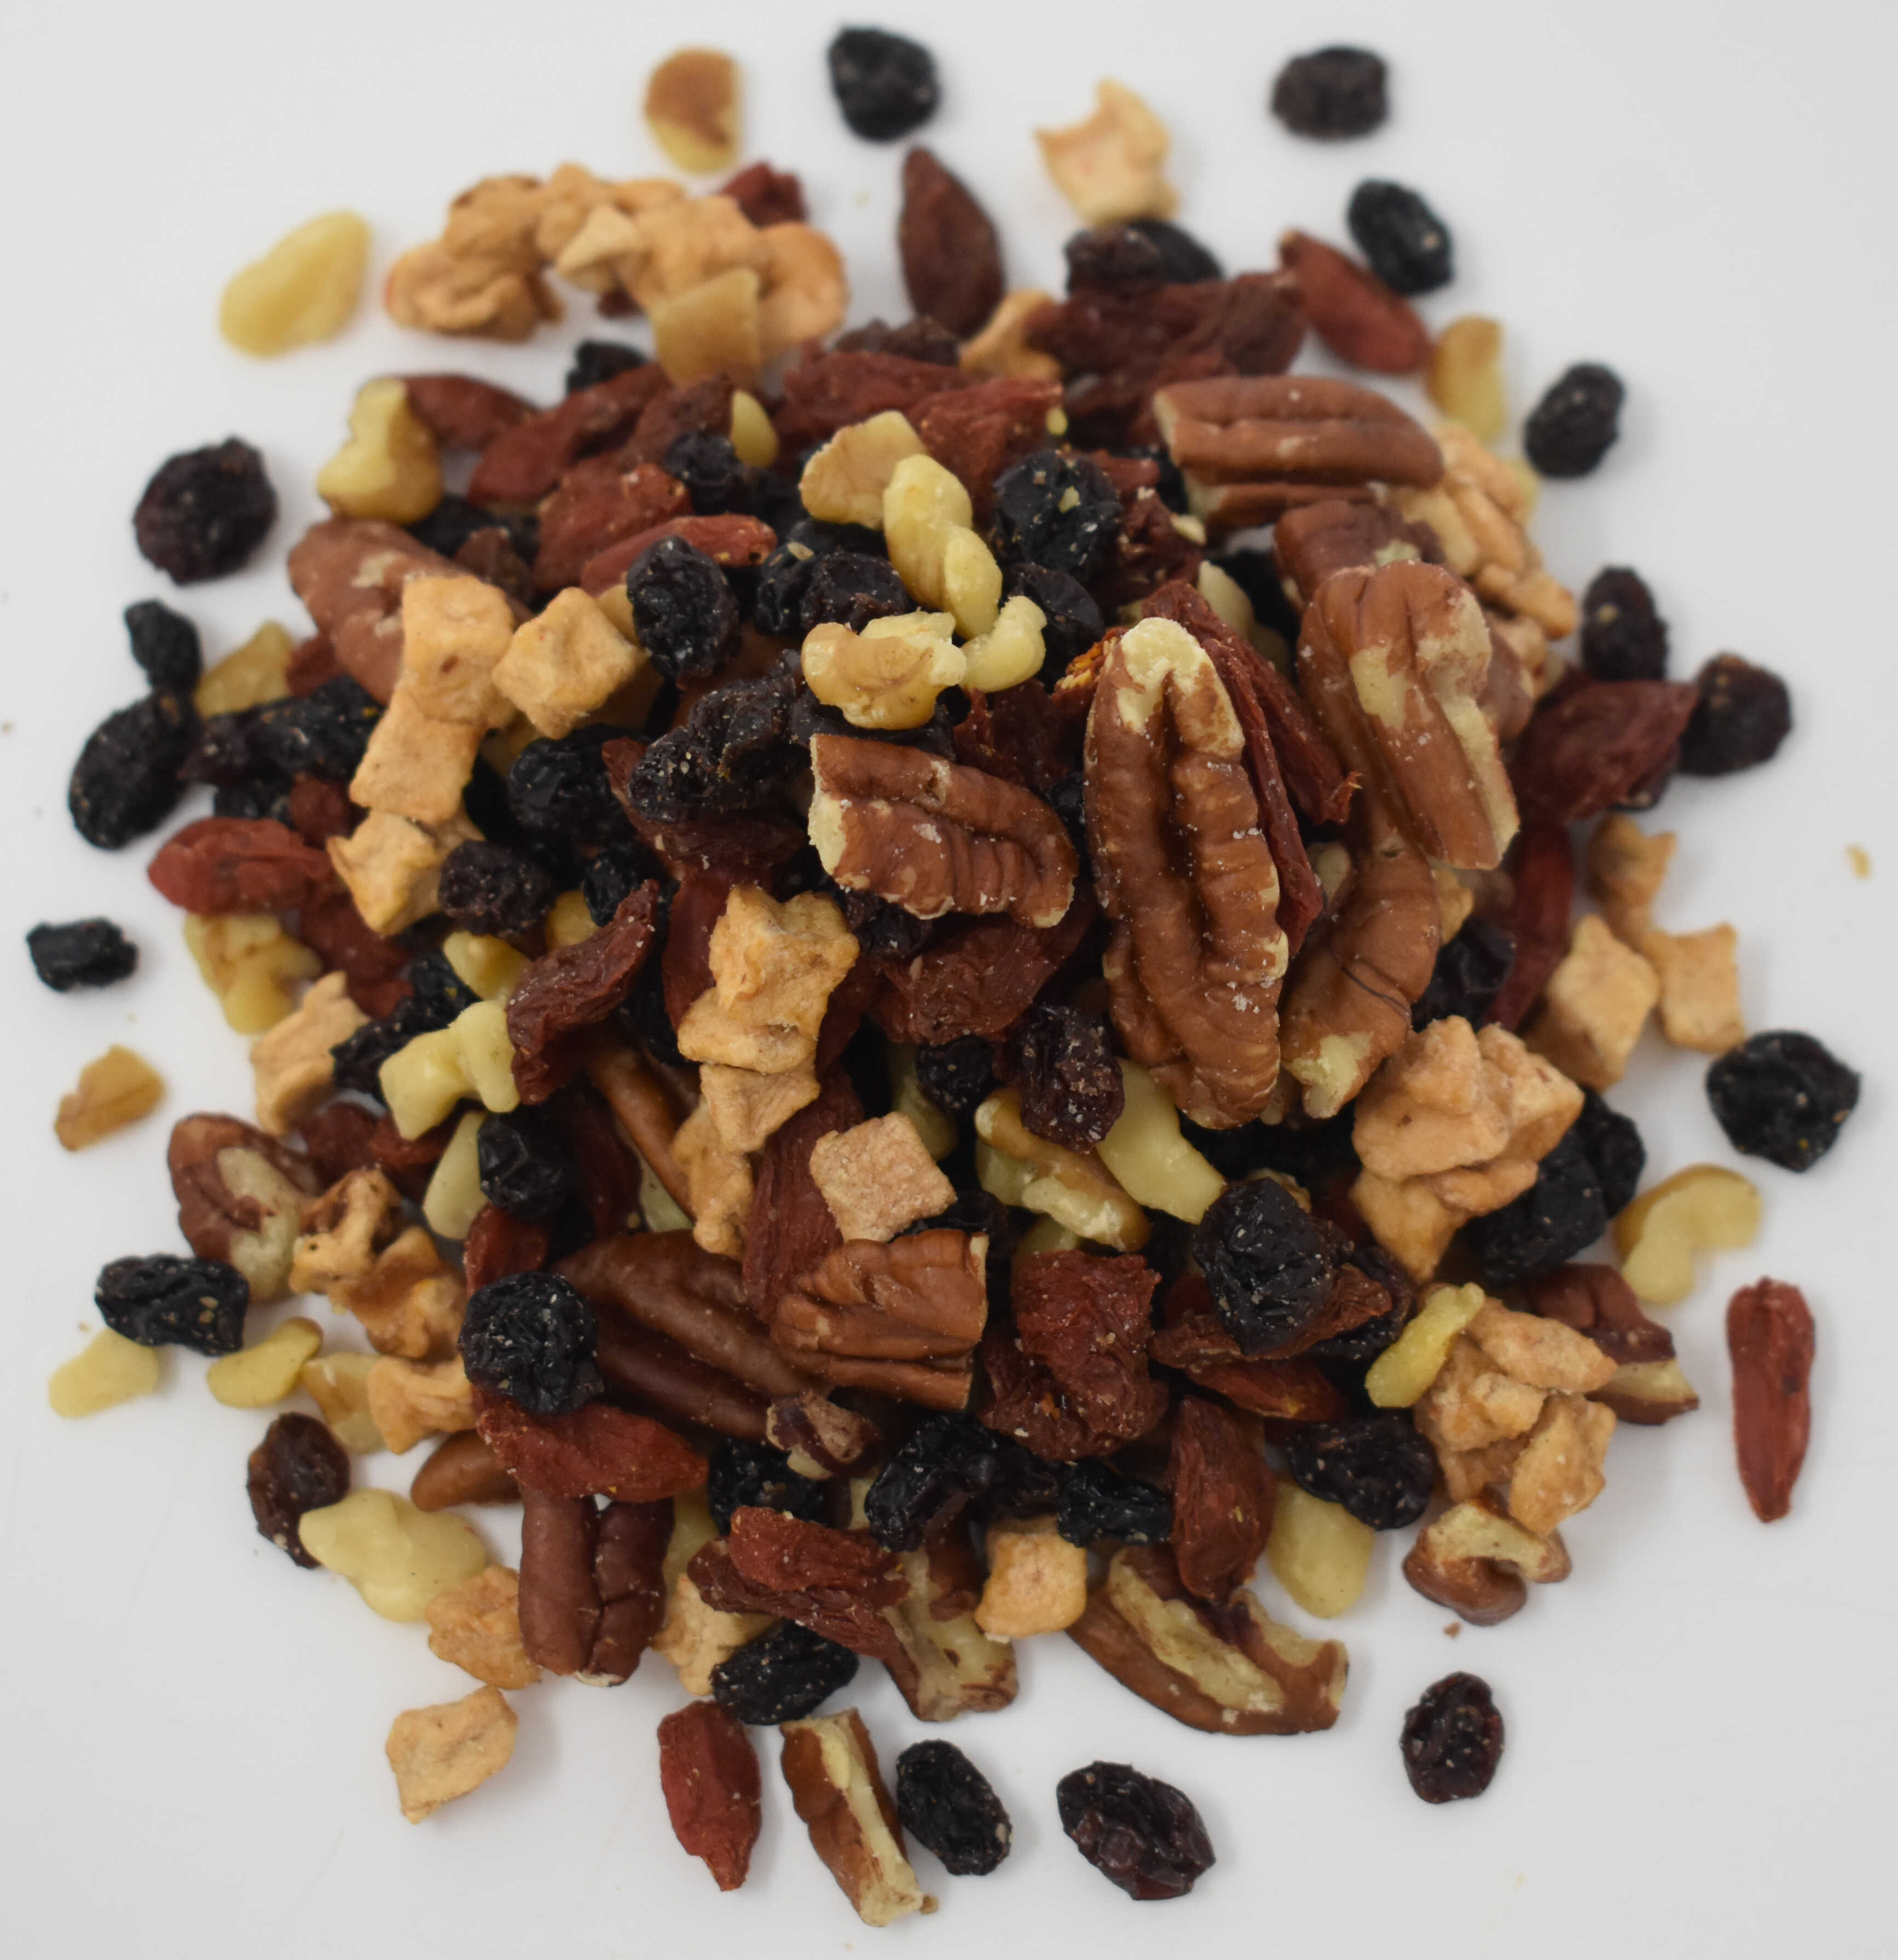 Fruit and Nut Antioxidant Mix - Top Photo